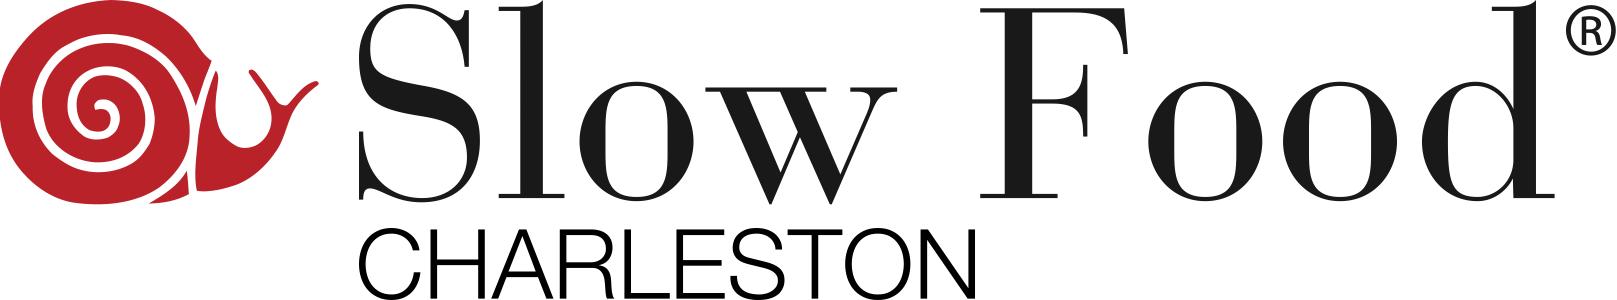 Slow Food Charleston logo